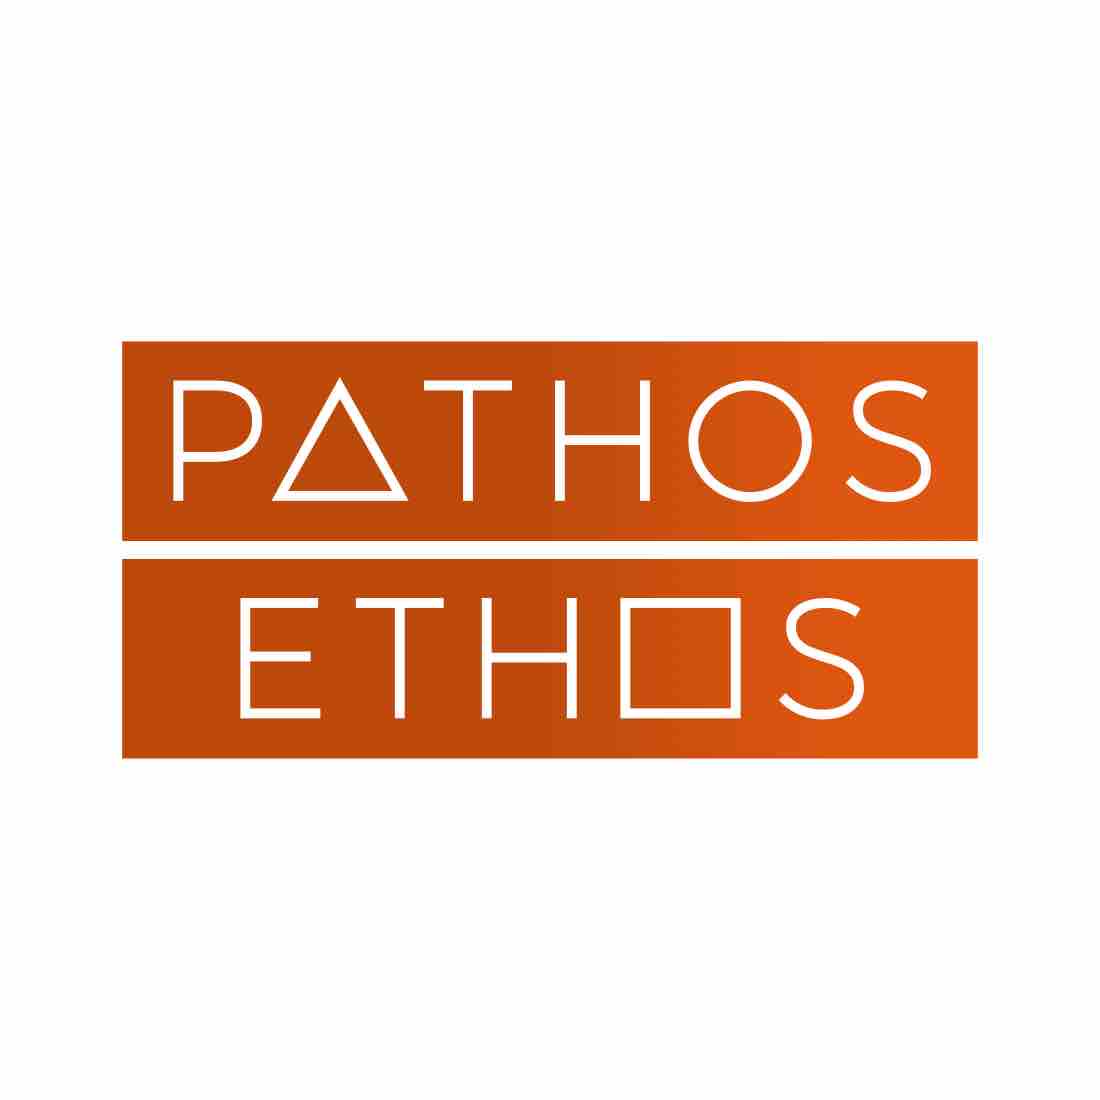 Pathos Ethos profile on Qualified.One